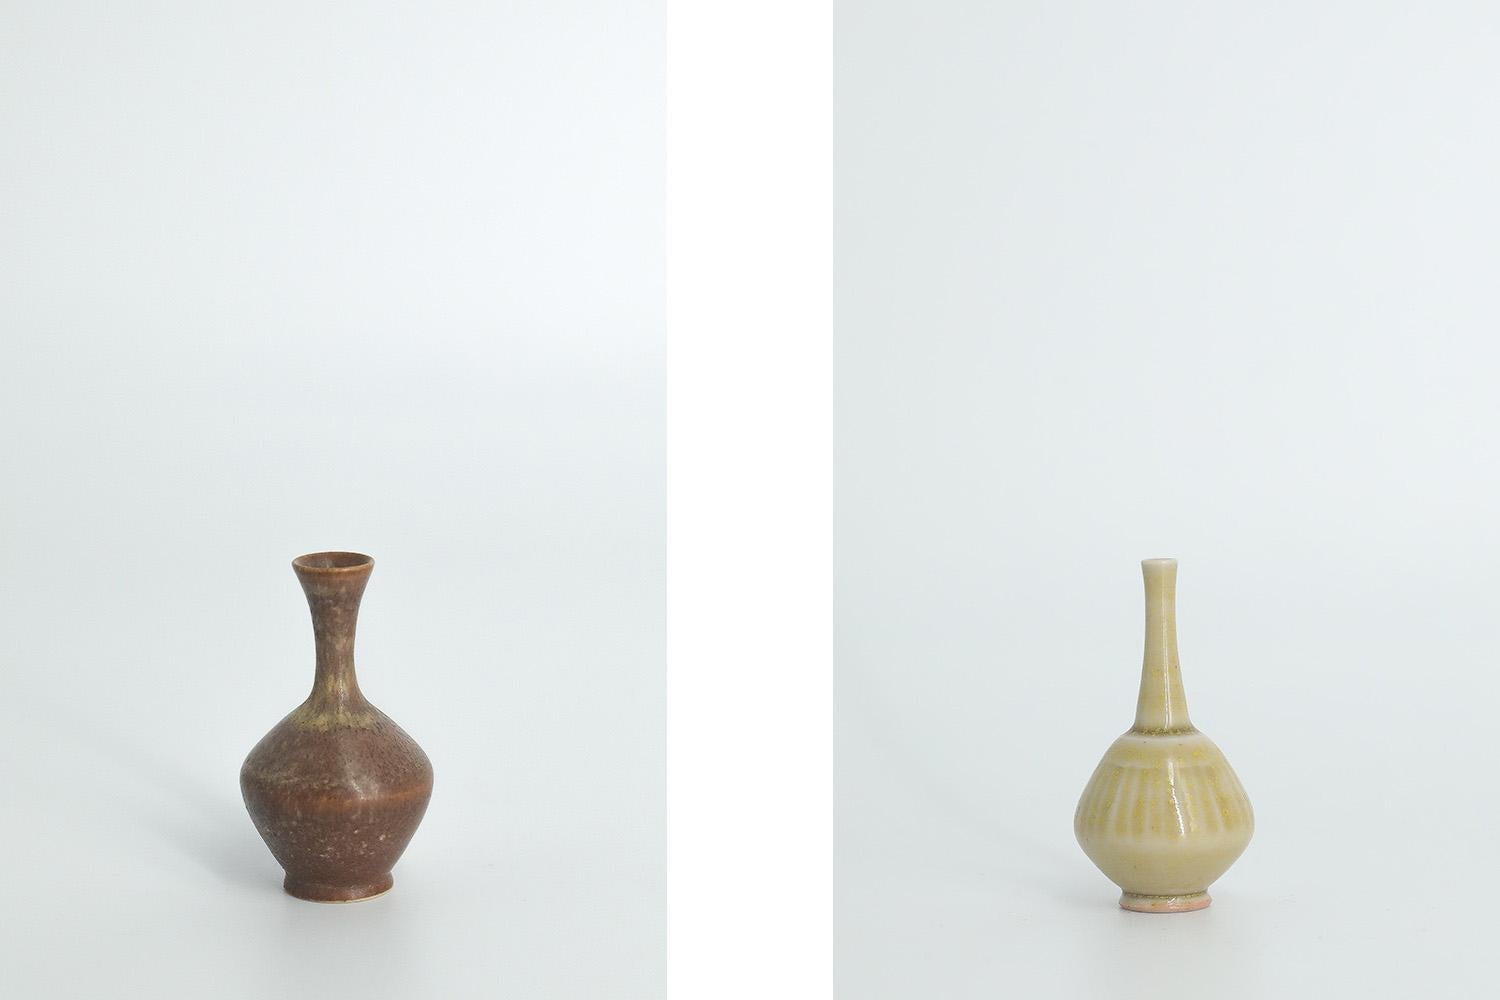 1. Height 8.5 cm | Width 6 cm | Depth 6 cm
2. Height 8.5 cm | Width 5.5 cm | Depth 5.5 cm
3. Height 5 cm | Width 3 cm | Depth 3 cm
4. Height 4.5 cm | Width 2.5 cm | Depth 2.5 cm

This set of 4 miniature vases was designed by Gunnar Borg for the